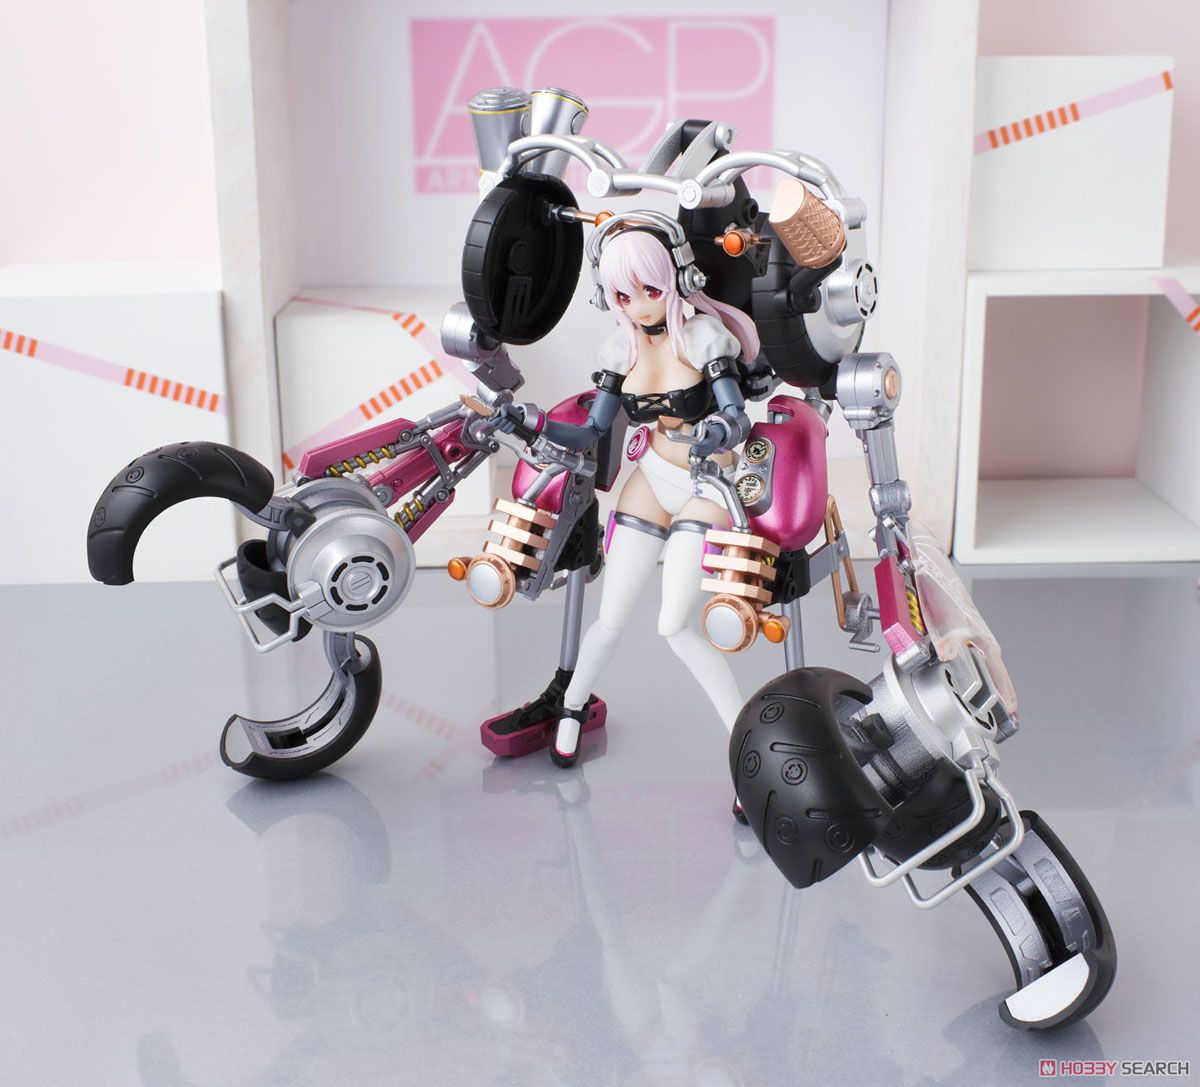 Armor Girls Project Super Sonico With Super Bikerobot 10th Anniversary Figure